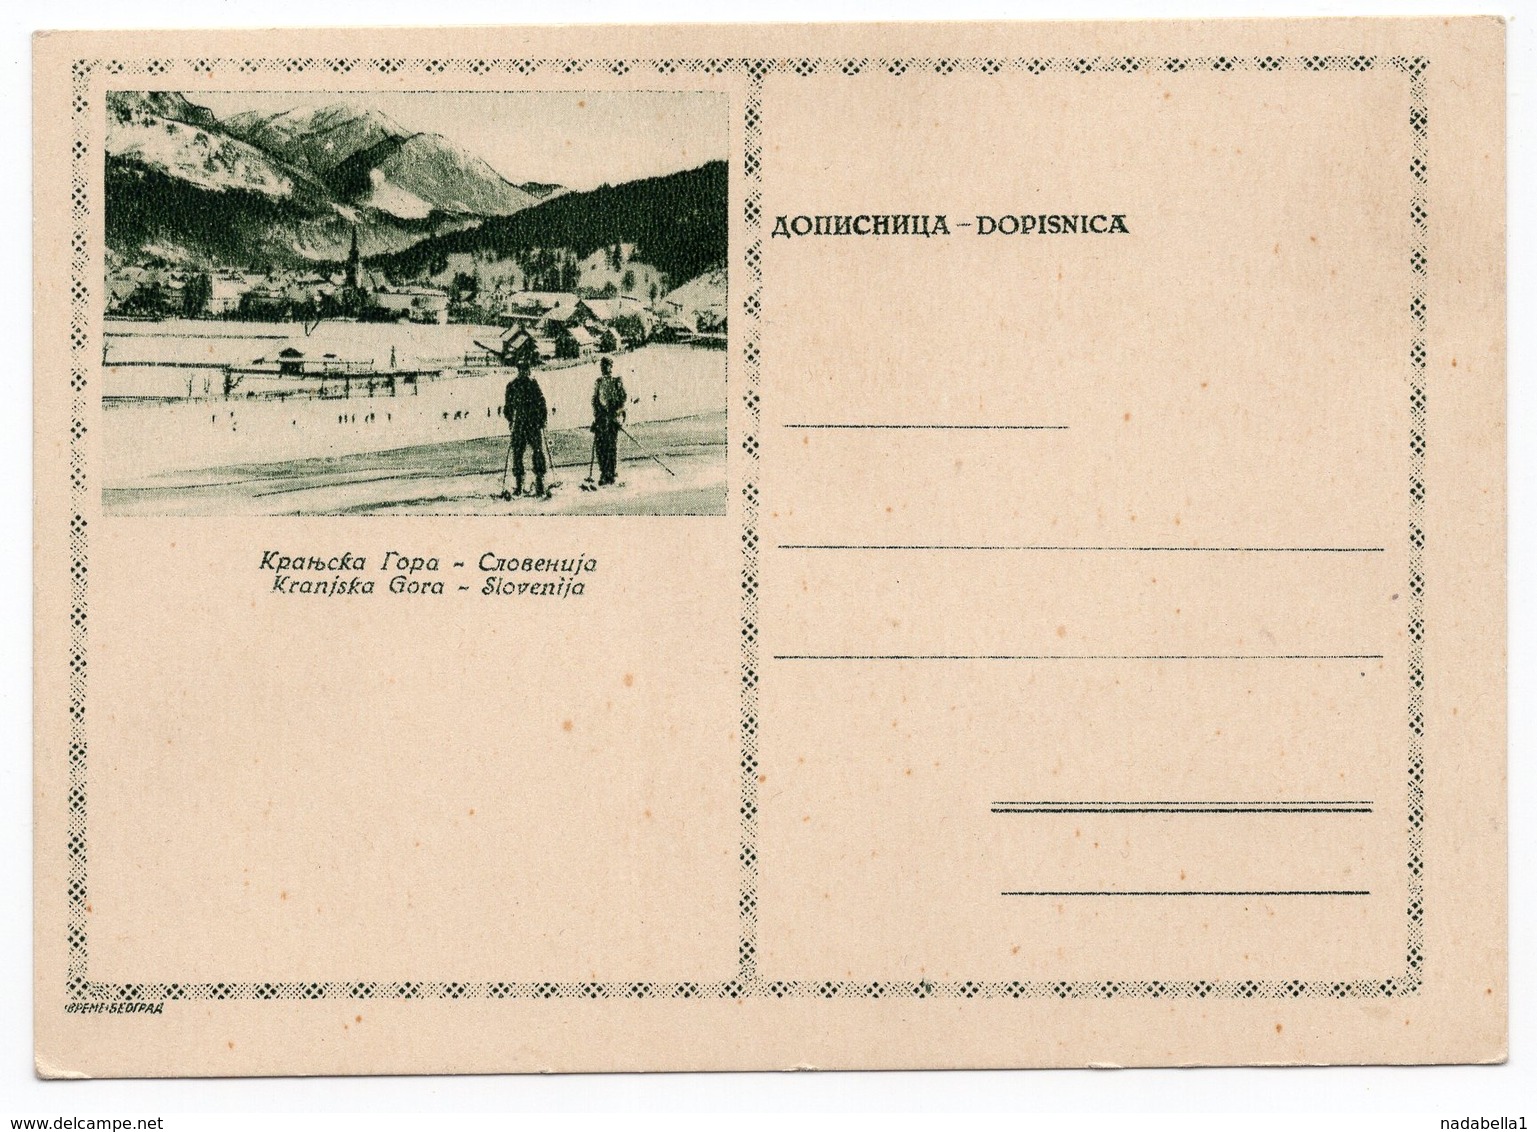 1940 YUGOSLAVIA, SLOVENIA, KRANJSKA GORA, TWO SKIERS, AROUND 1940, NOT USED - Postal Stationery